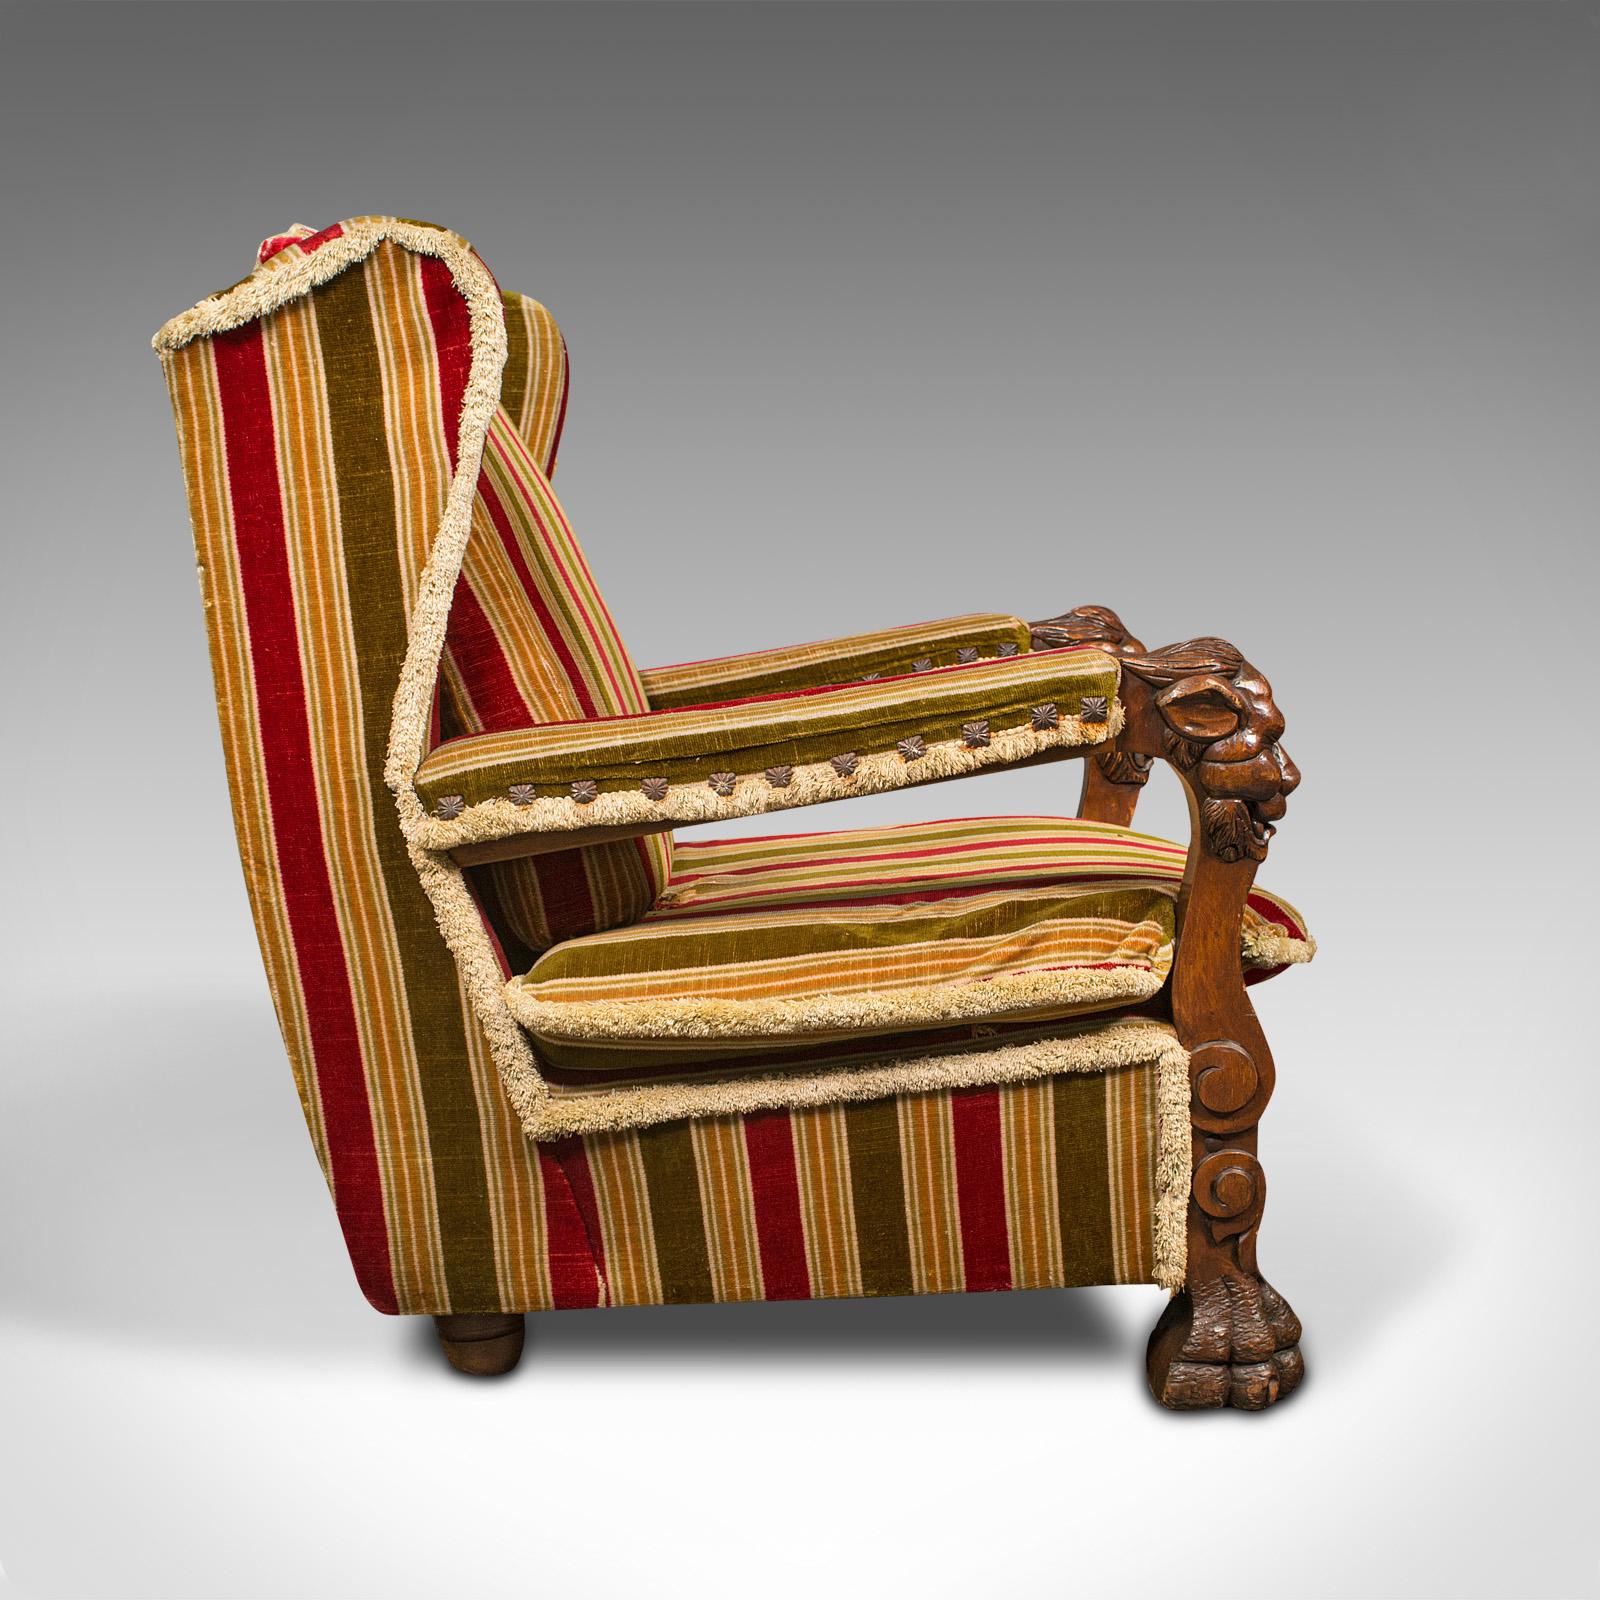 British Vintage Wing Back Arm Chair, English, Oak, Armchair, Gothic Revival, Circa 1950